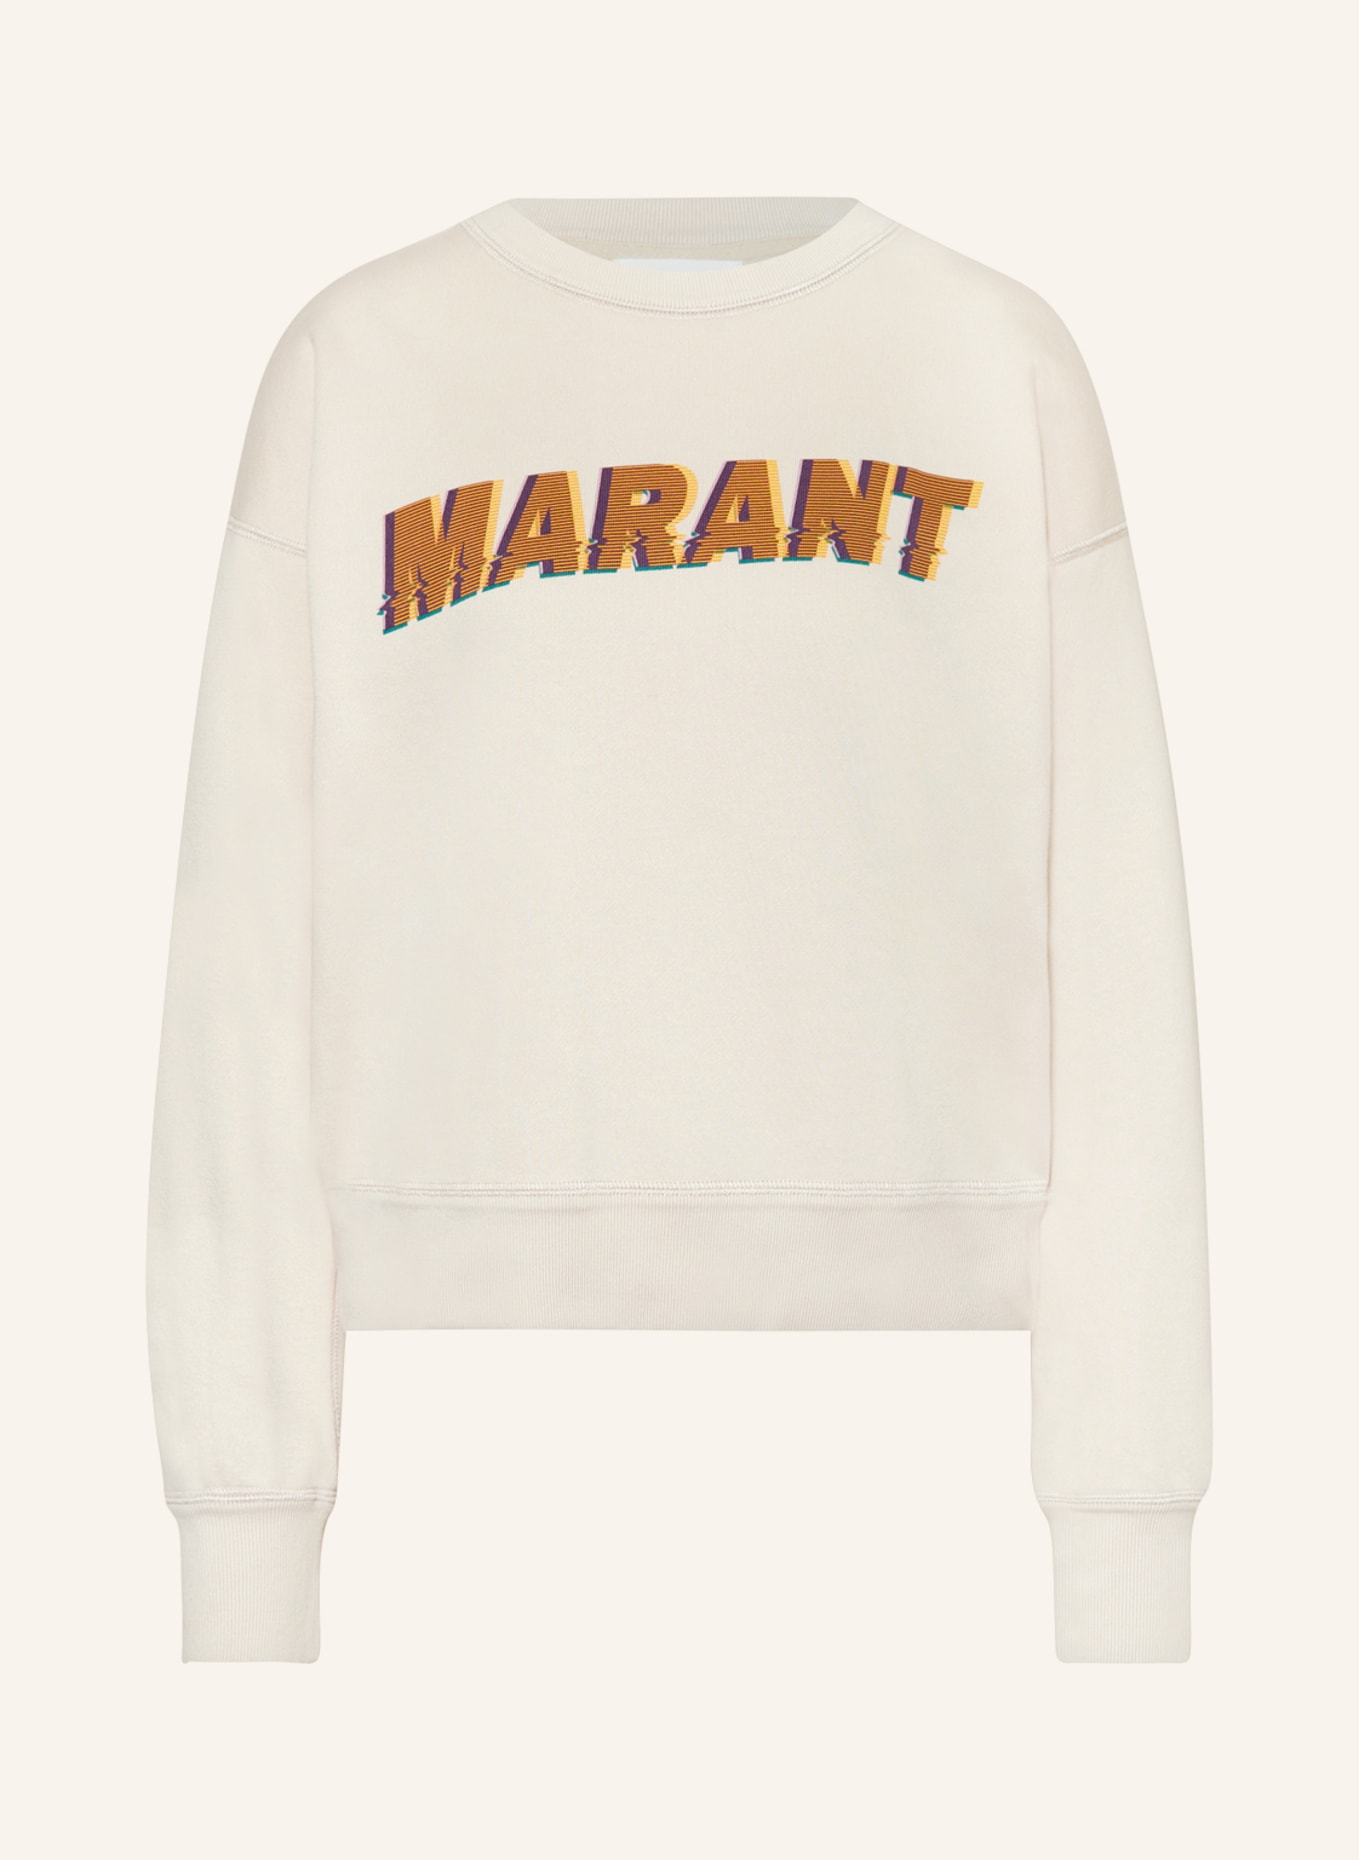 MARANT ÉTOILE Sweatshirt MOBYLI, Farbe: CREME (Bild 1)